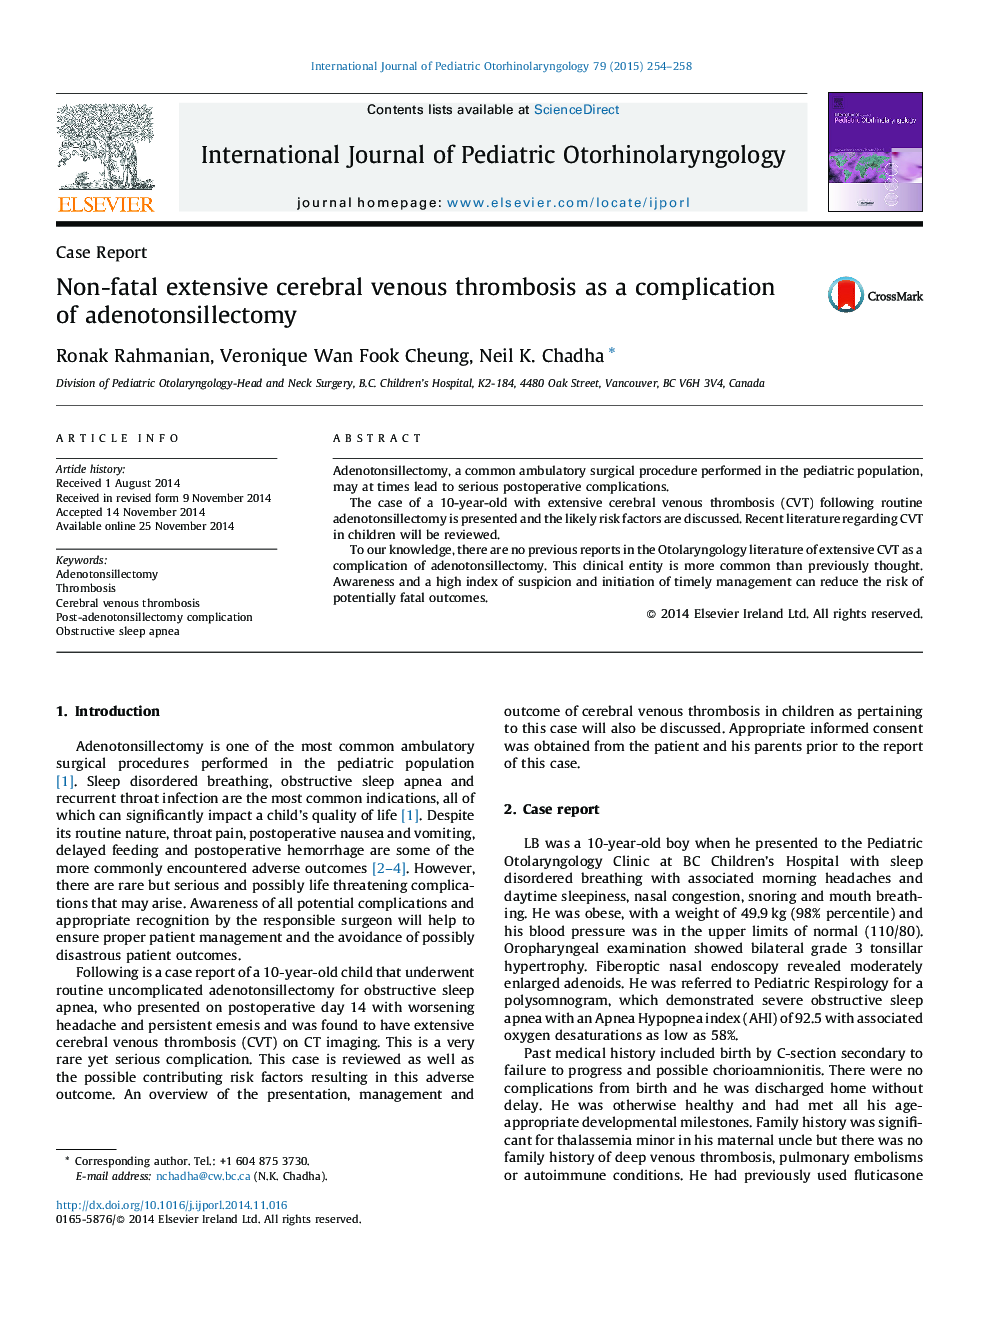 Non-fatal extensive cerebral venous thrombosis as a complication of adenotonsillectomy